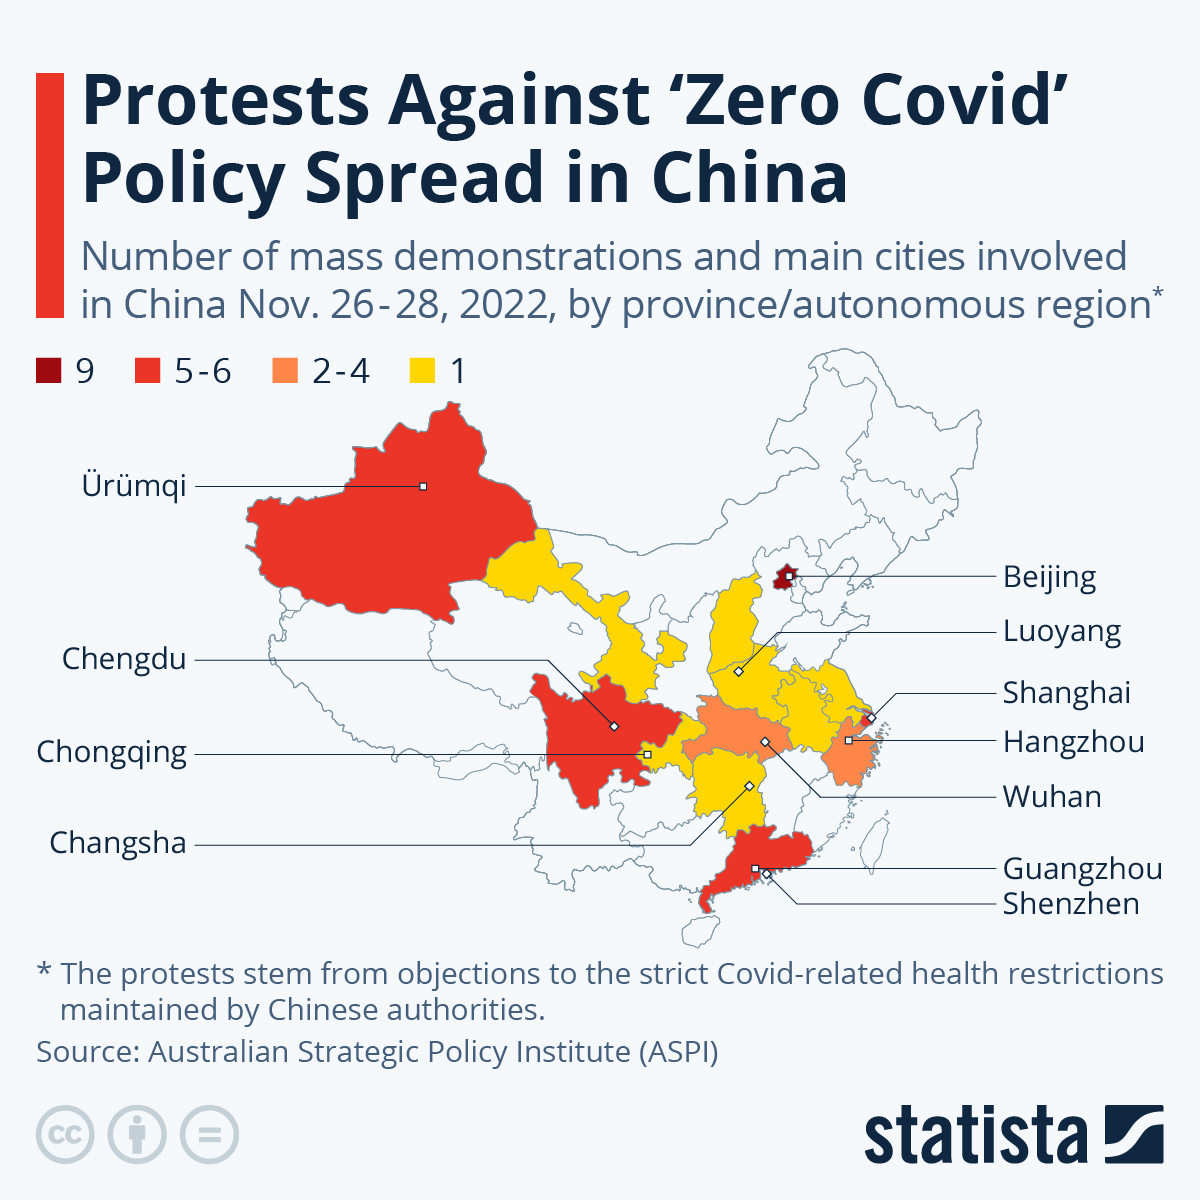 Protests Against Zero Covid Policy Spread in China